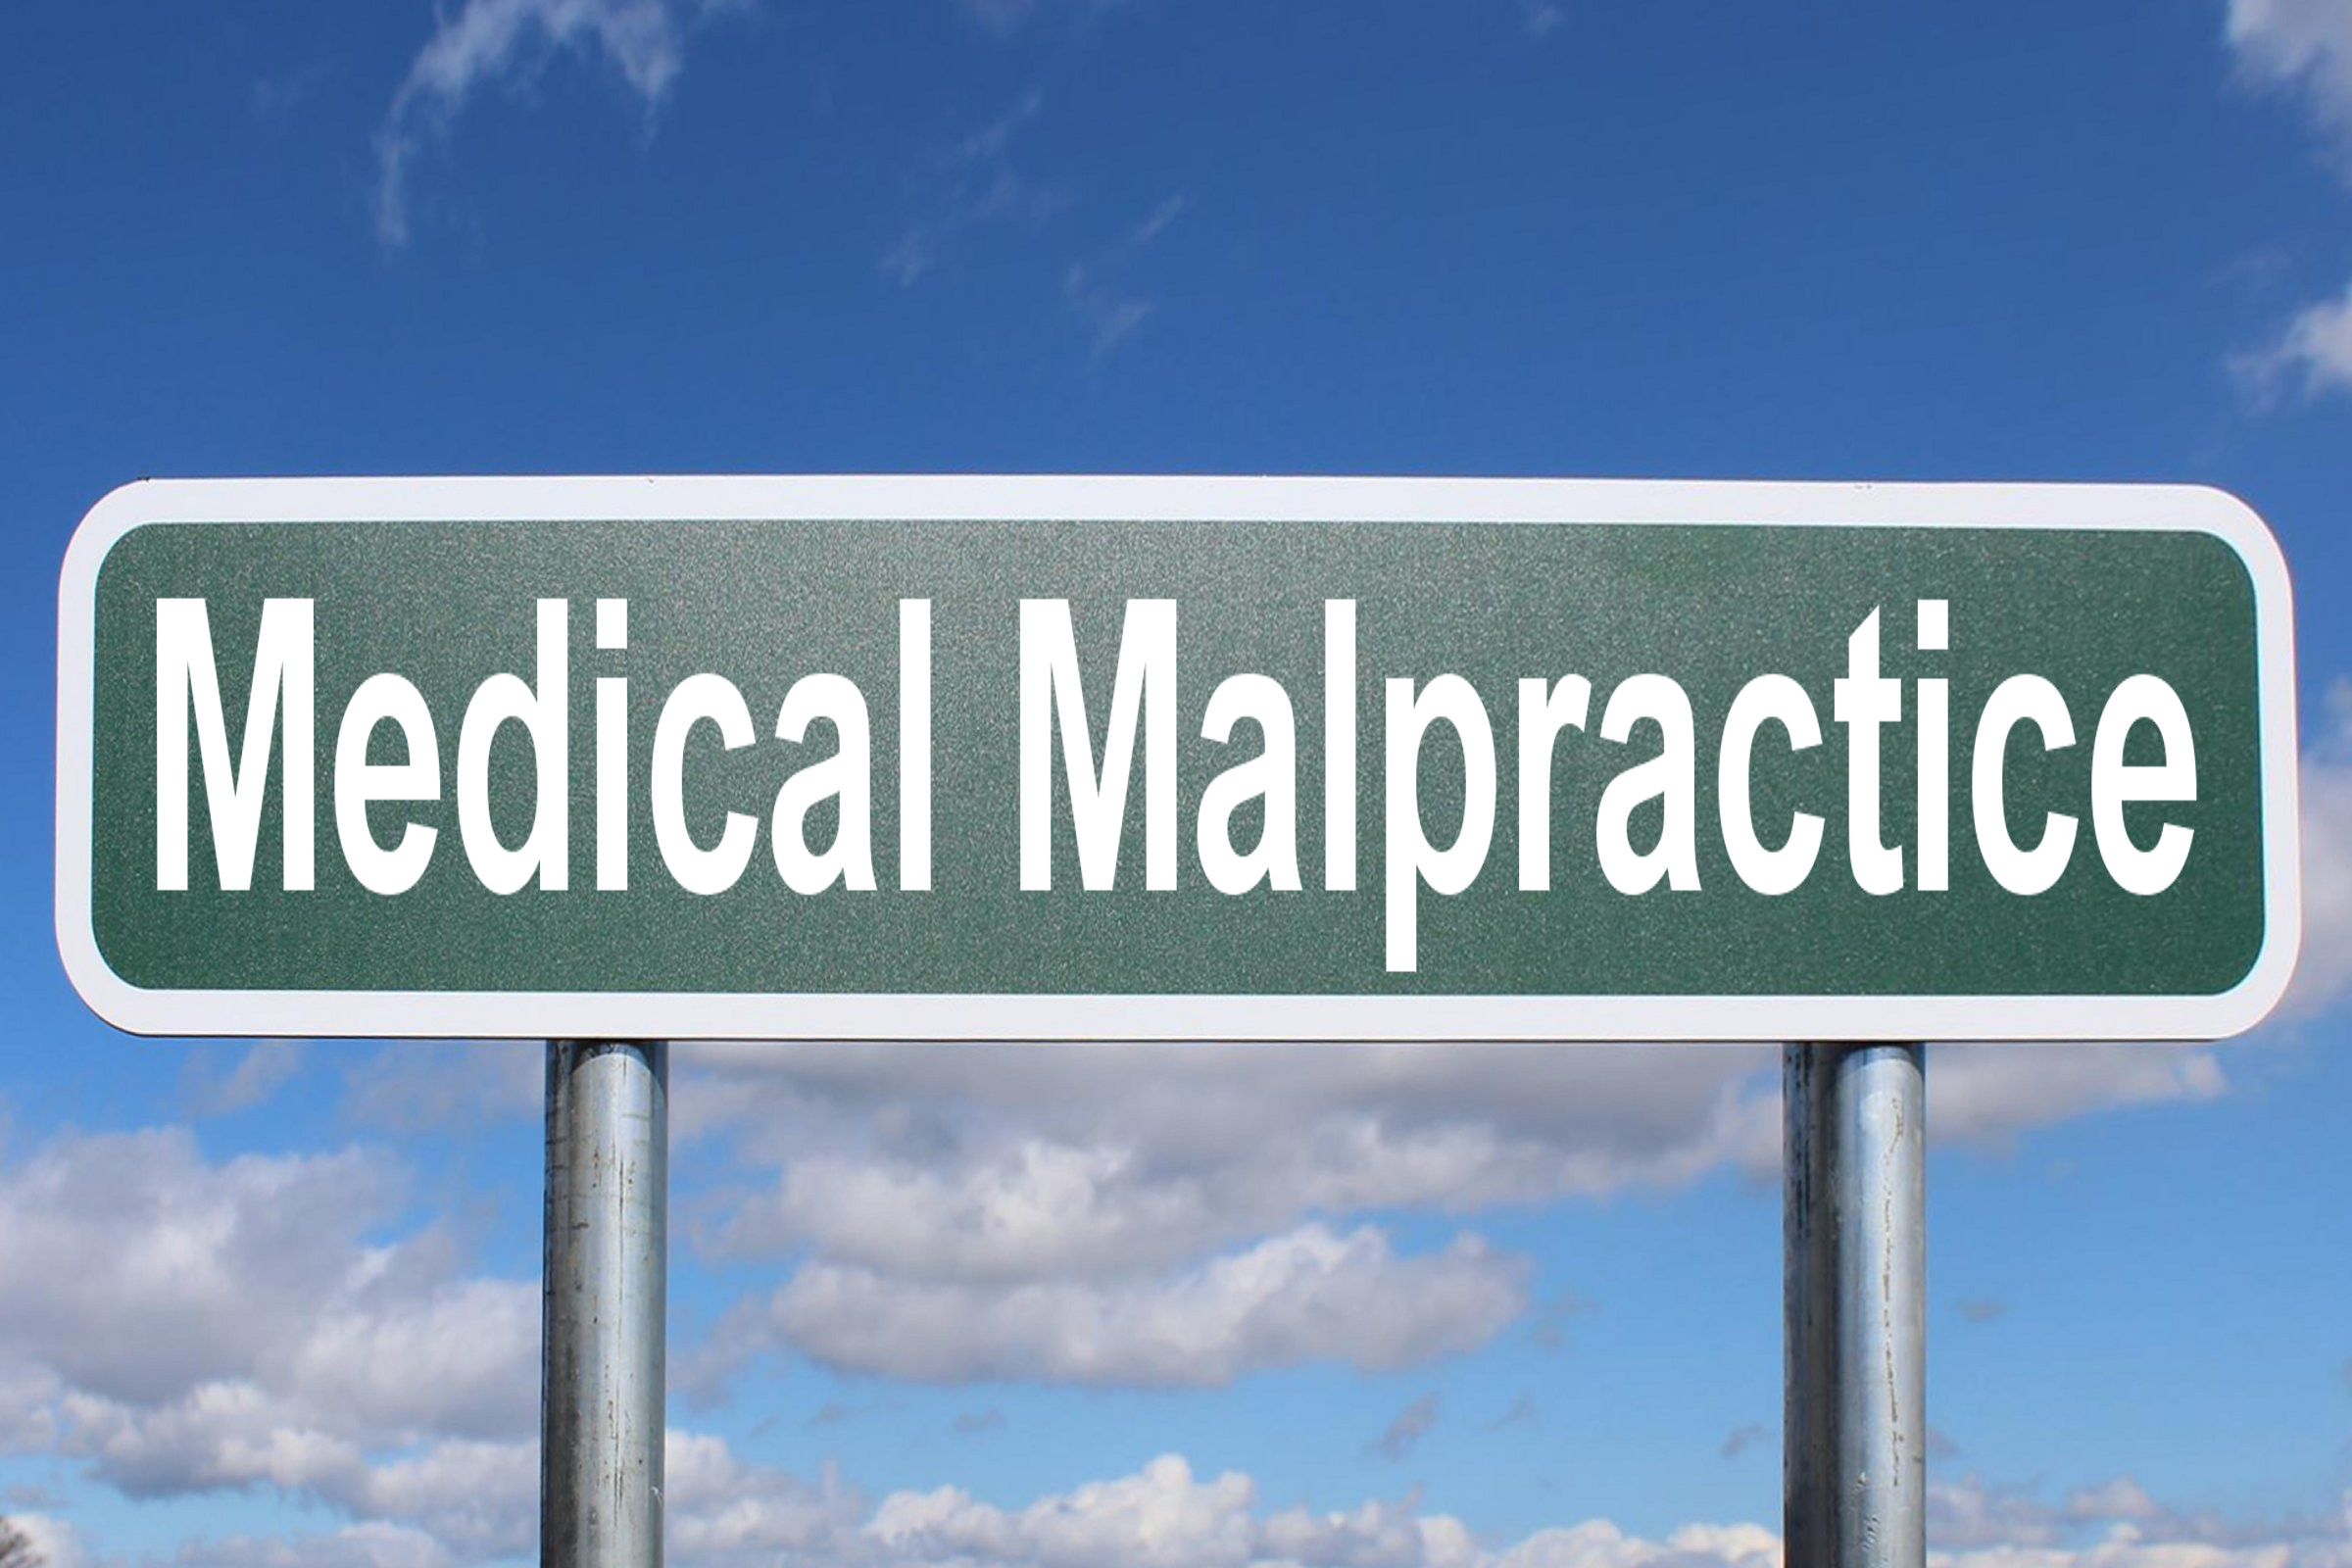 medical malpractice